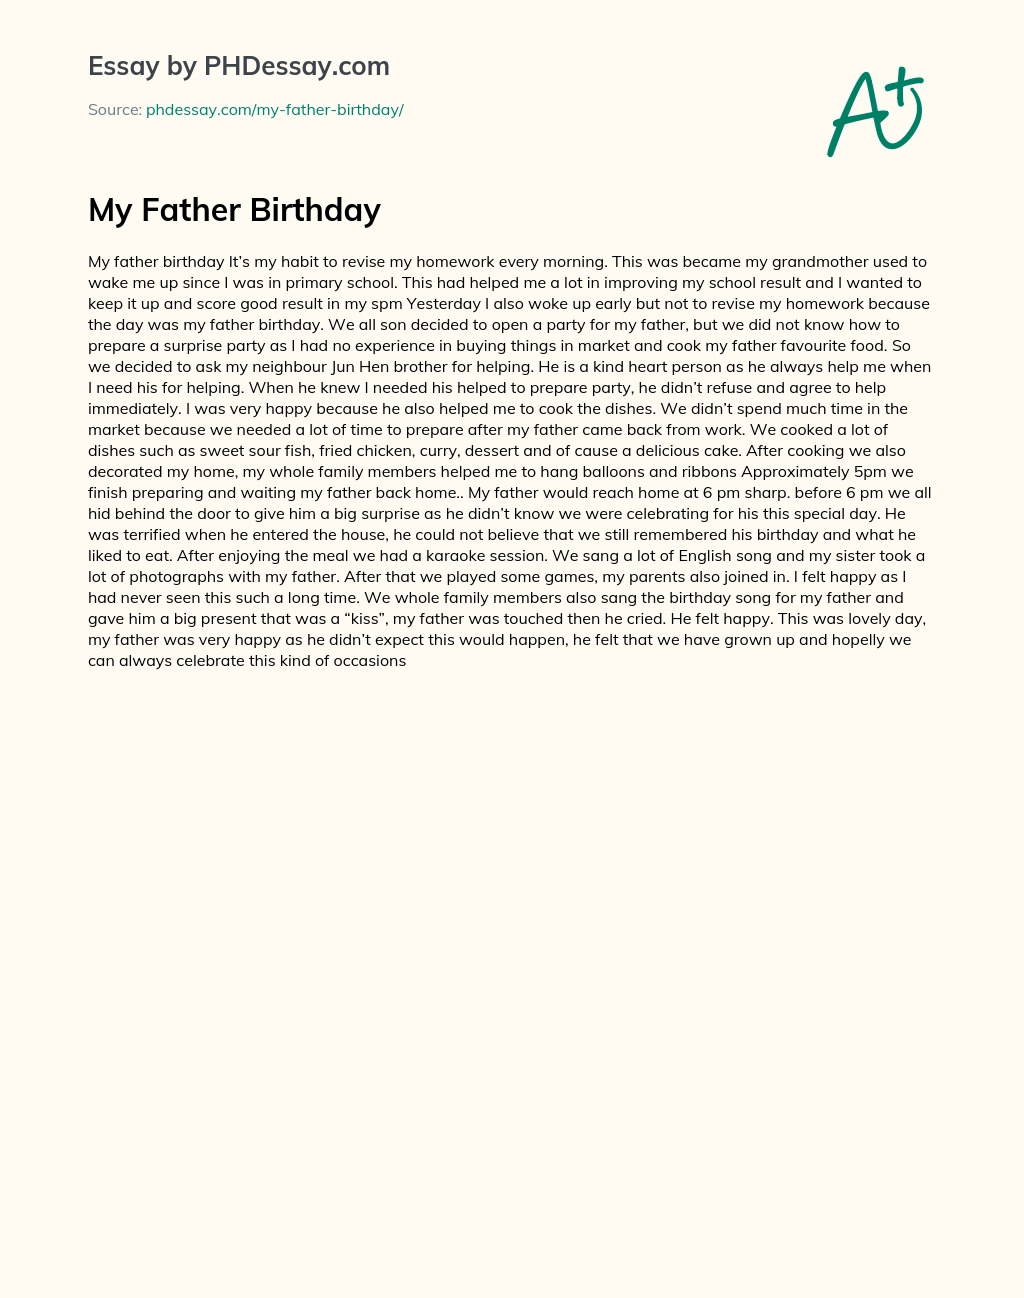 essay father's birthday